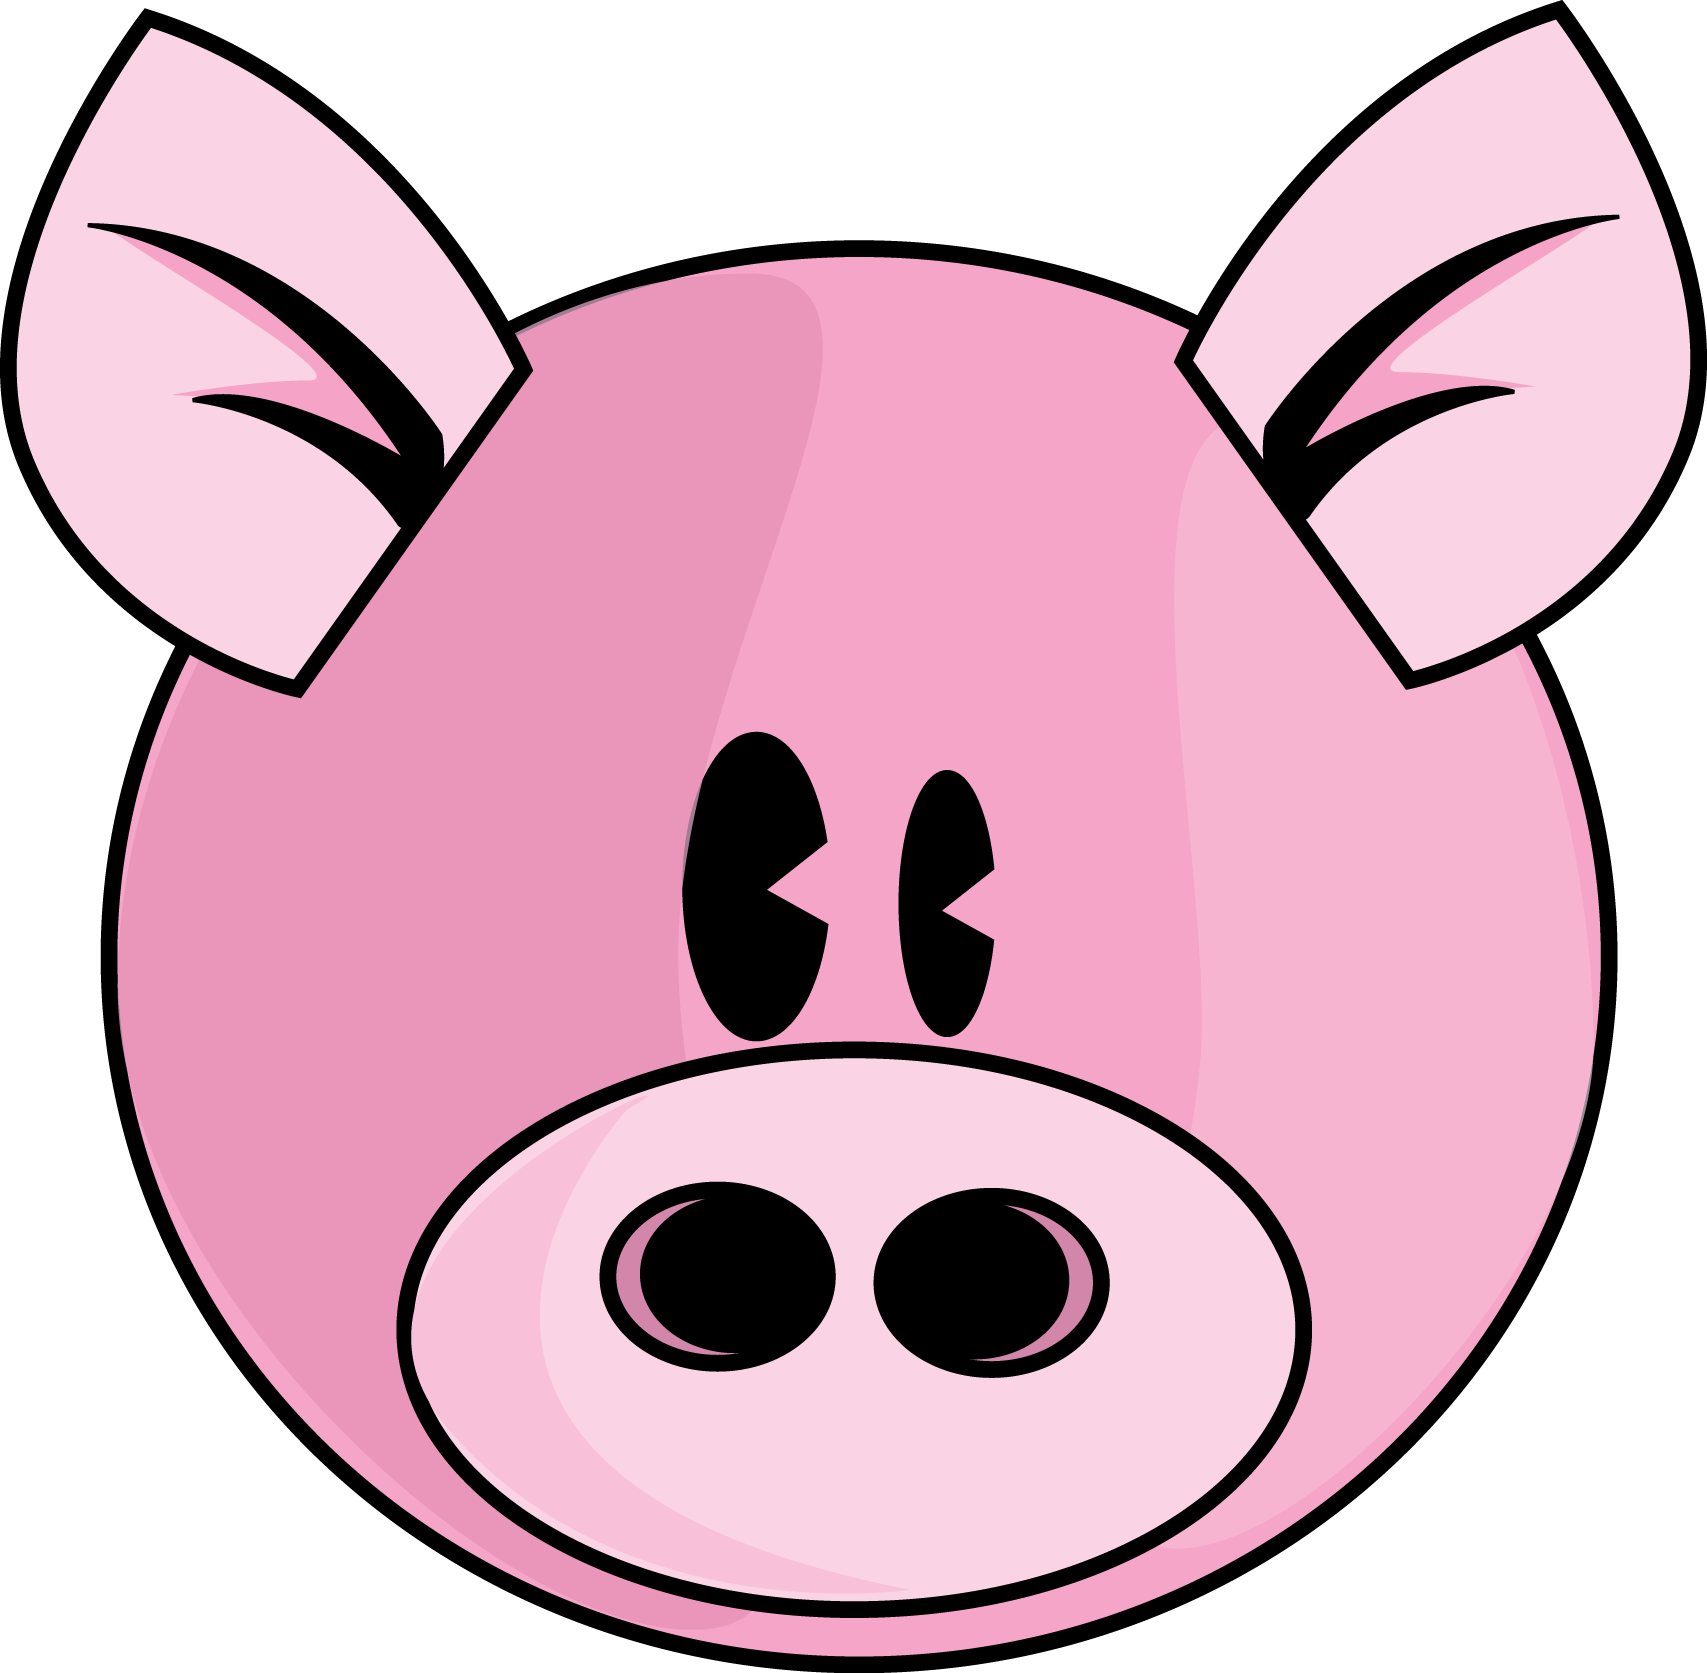 Cute Pig Face Clip Art - Free Clipart Images